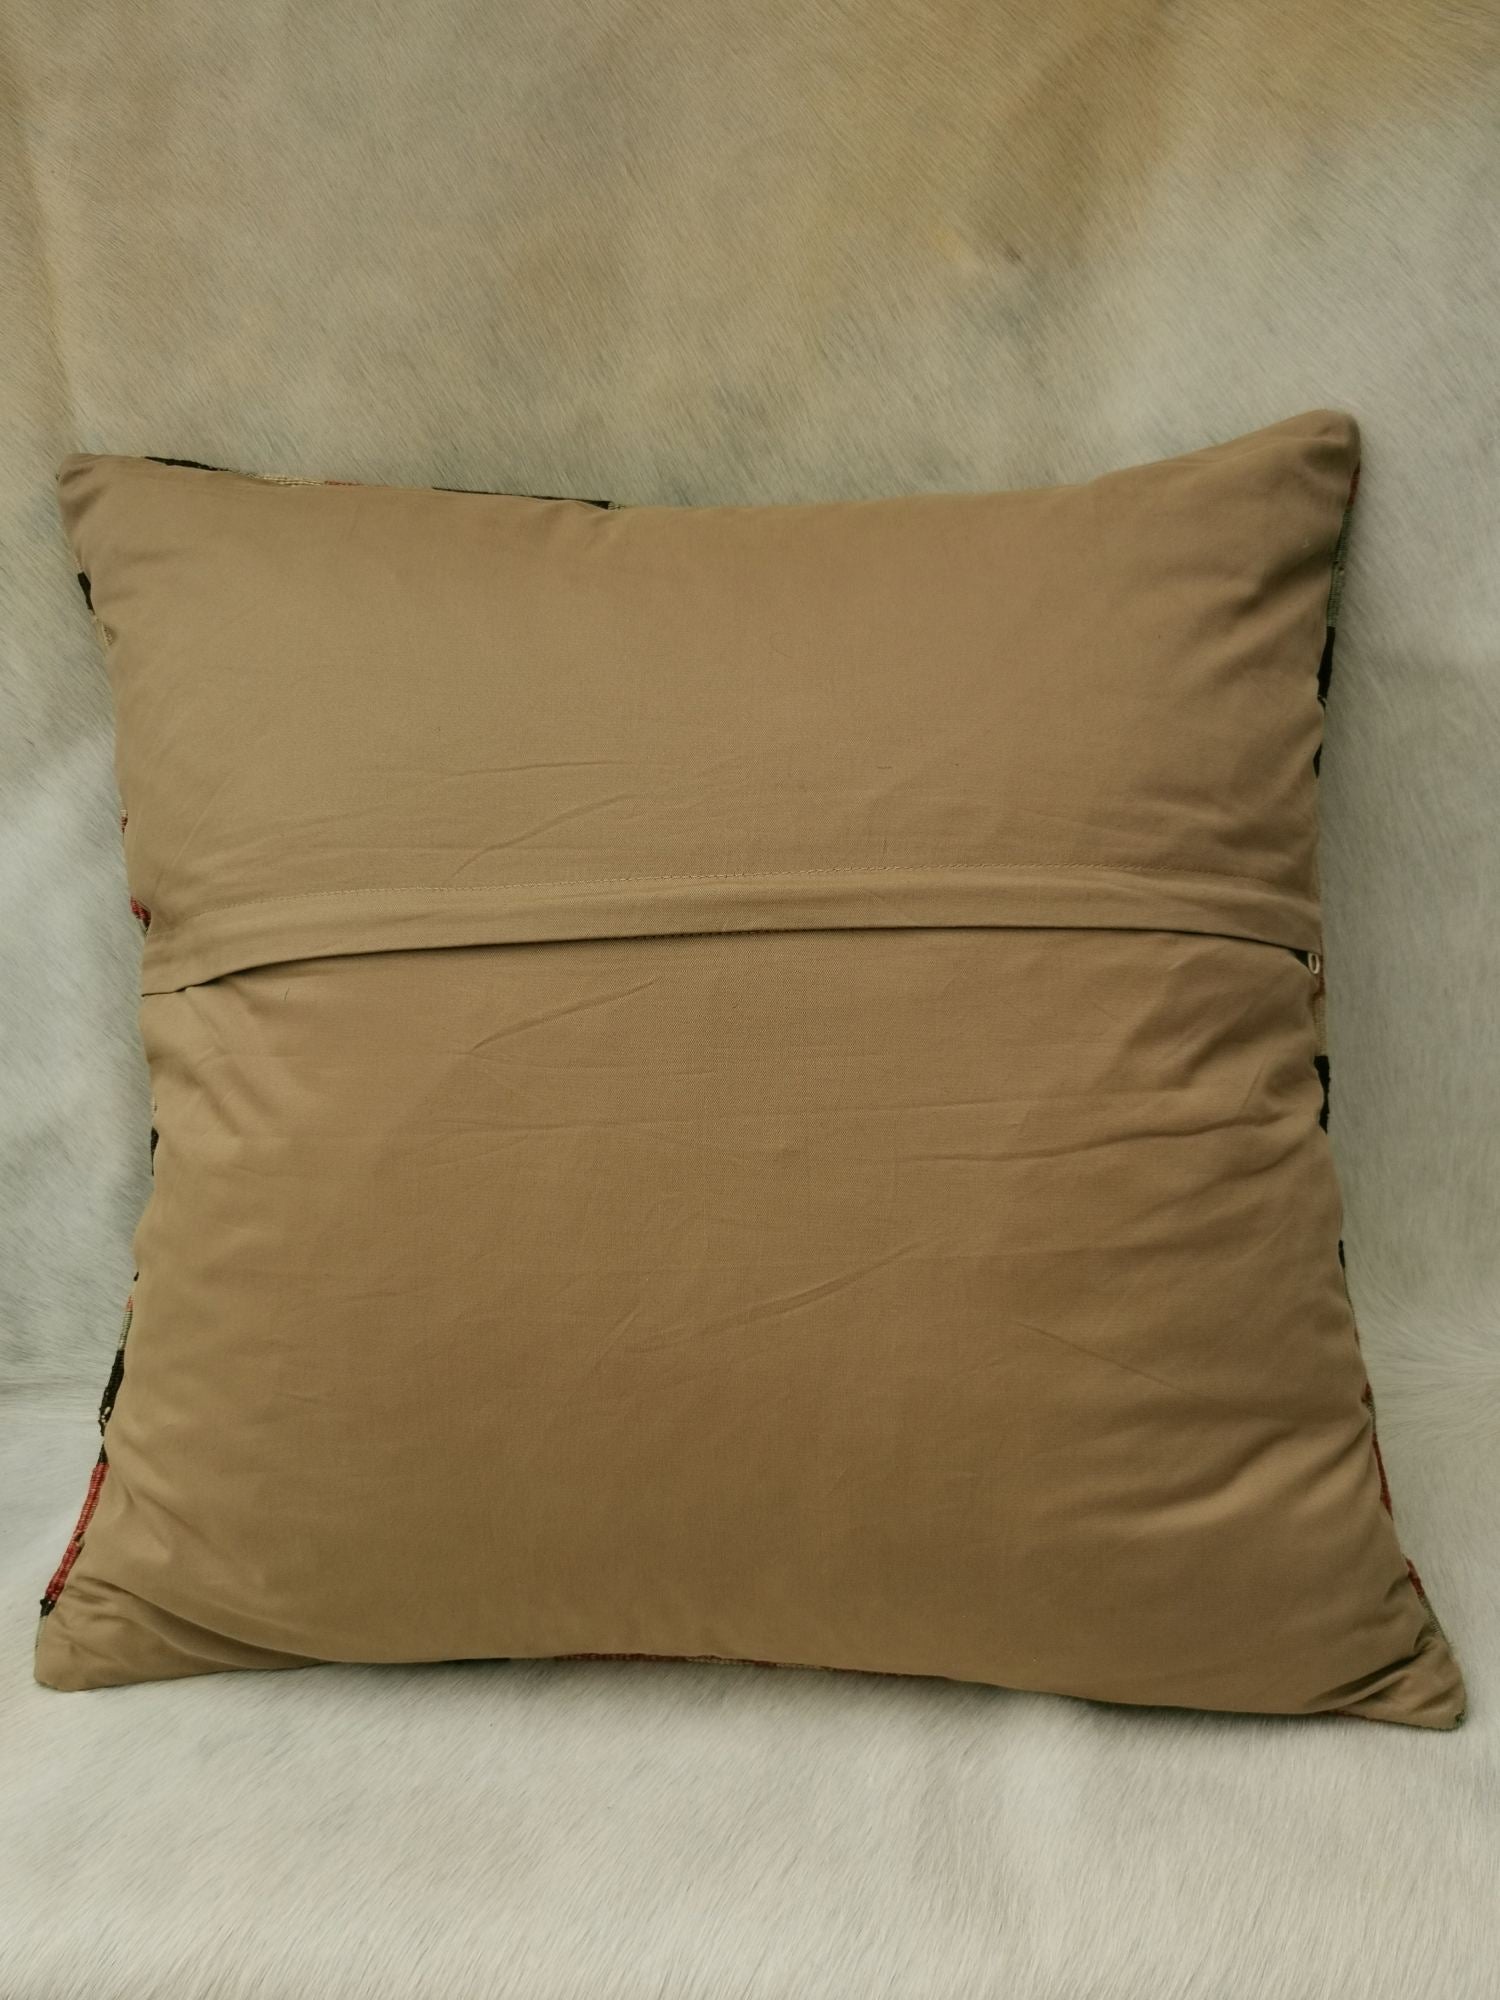 Kilim Pillow, Kilim Pillow Cover, unique Pillow Case, vintage Kilim Pillow, Kilim Cushion, Throwpillow, pillow case, boho pillow, eclectic, arabic design